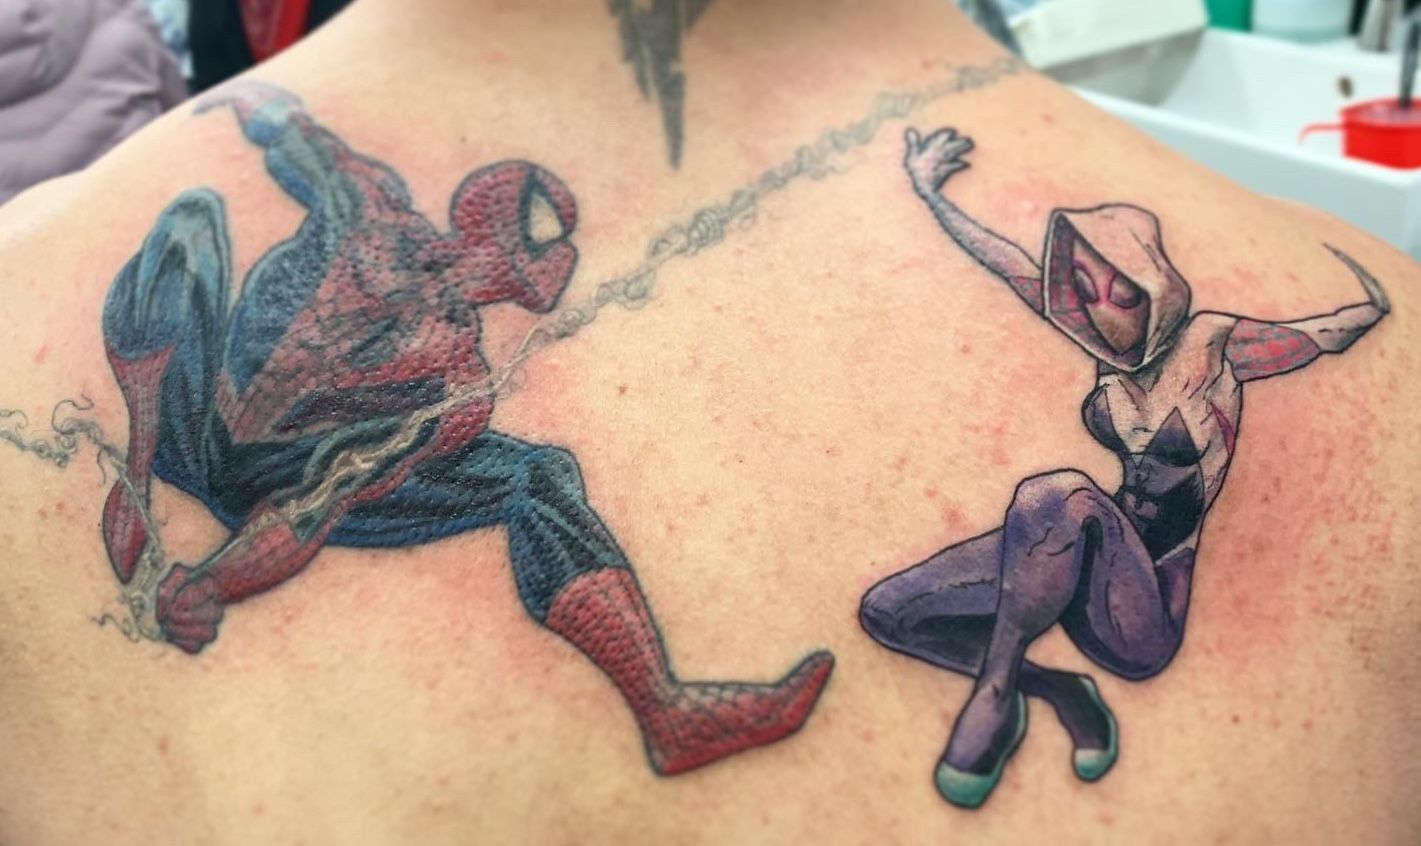 Andrew Wilson on Twitter Made a tattoo of spidergwen referenced from  Artgerm Marvel tattoos blackwork darkartists httpstcoJle405o4M7   Twitter